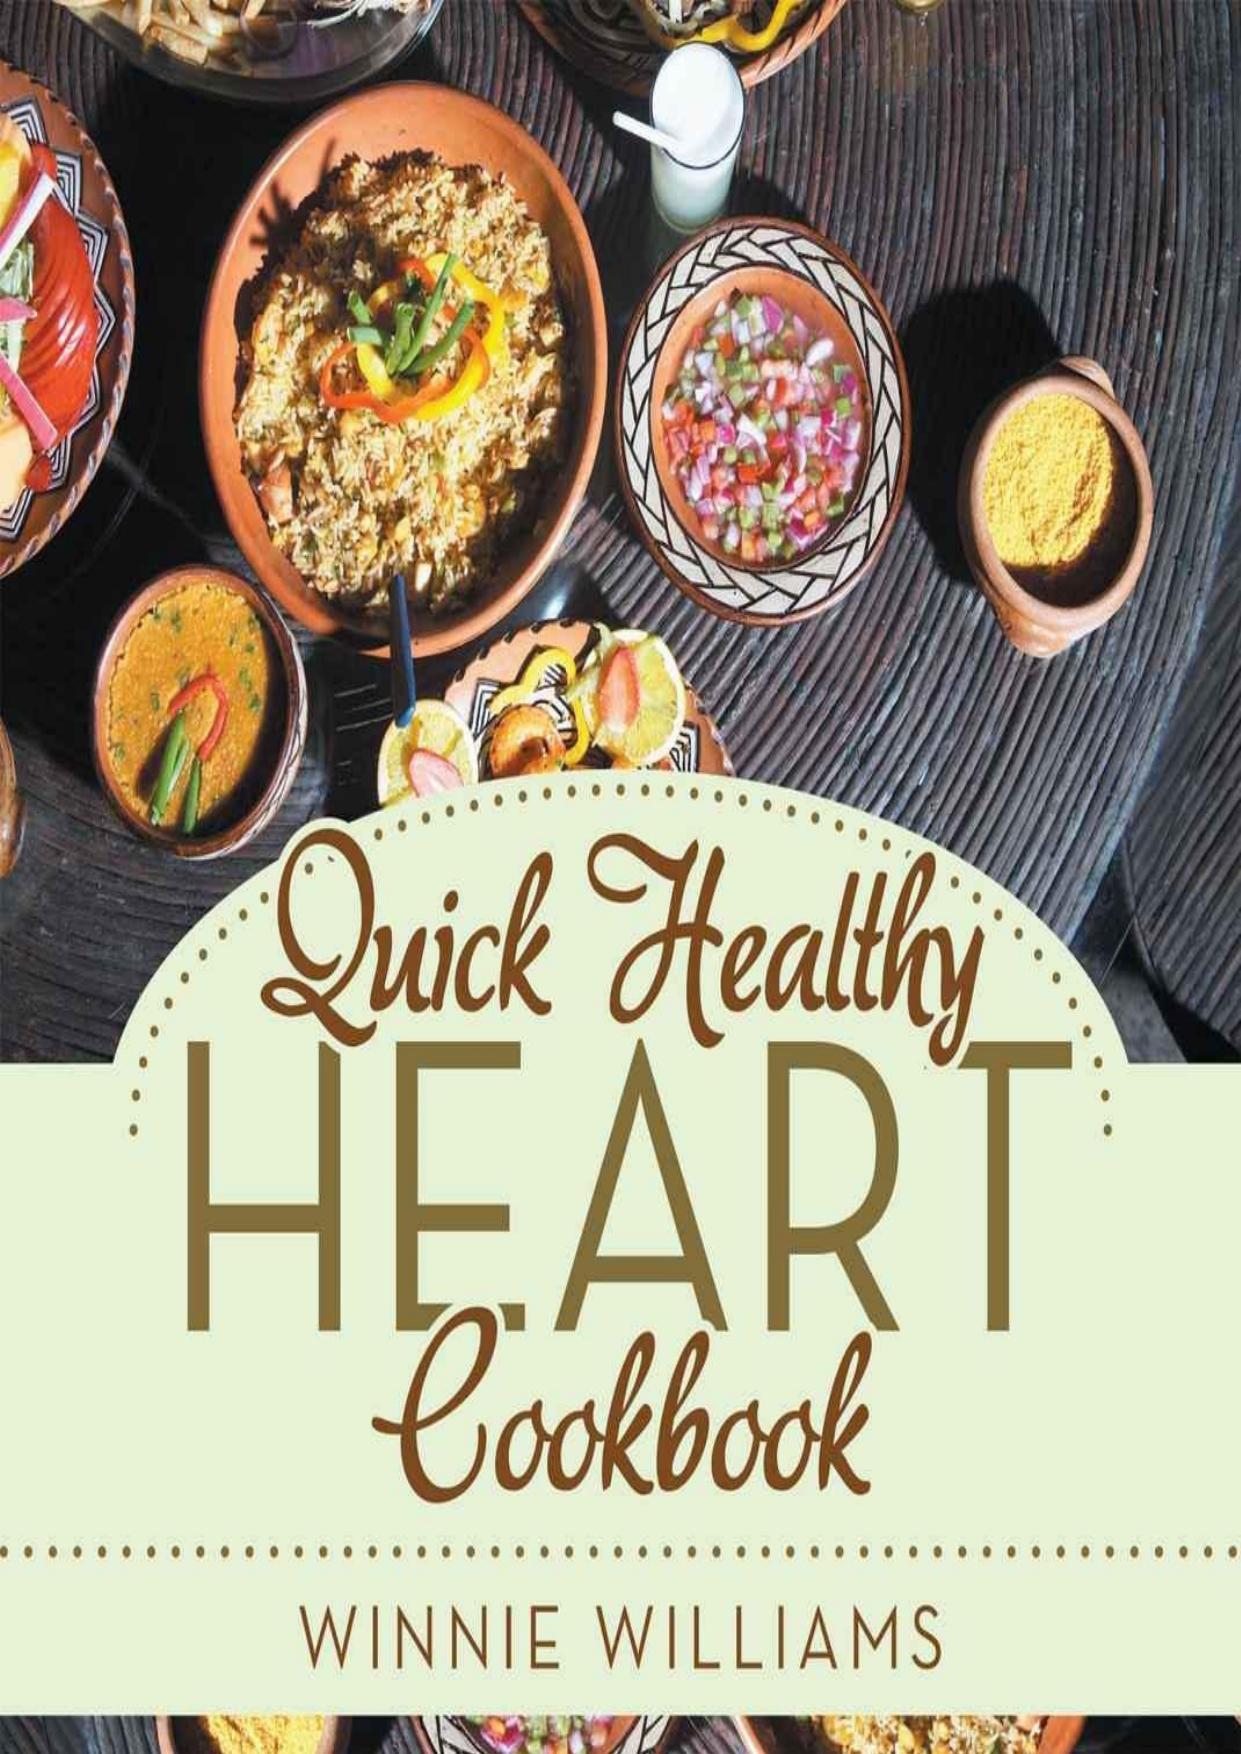 Quick Healthy Heart Cookbook by Winnie Williams